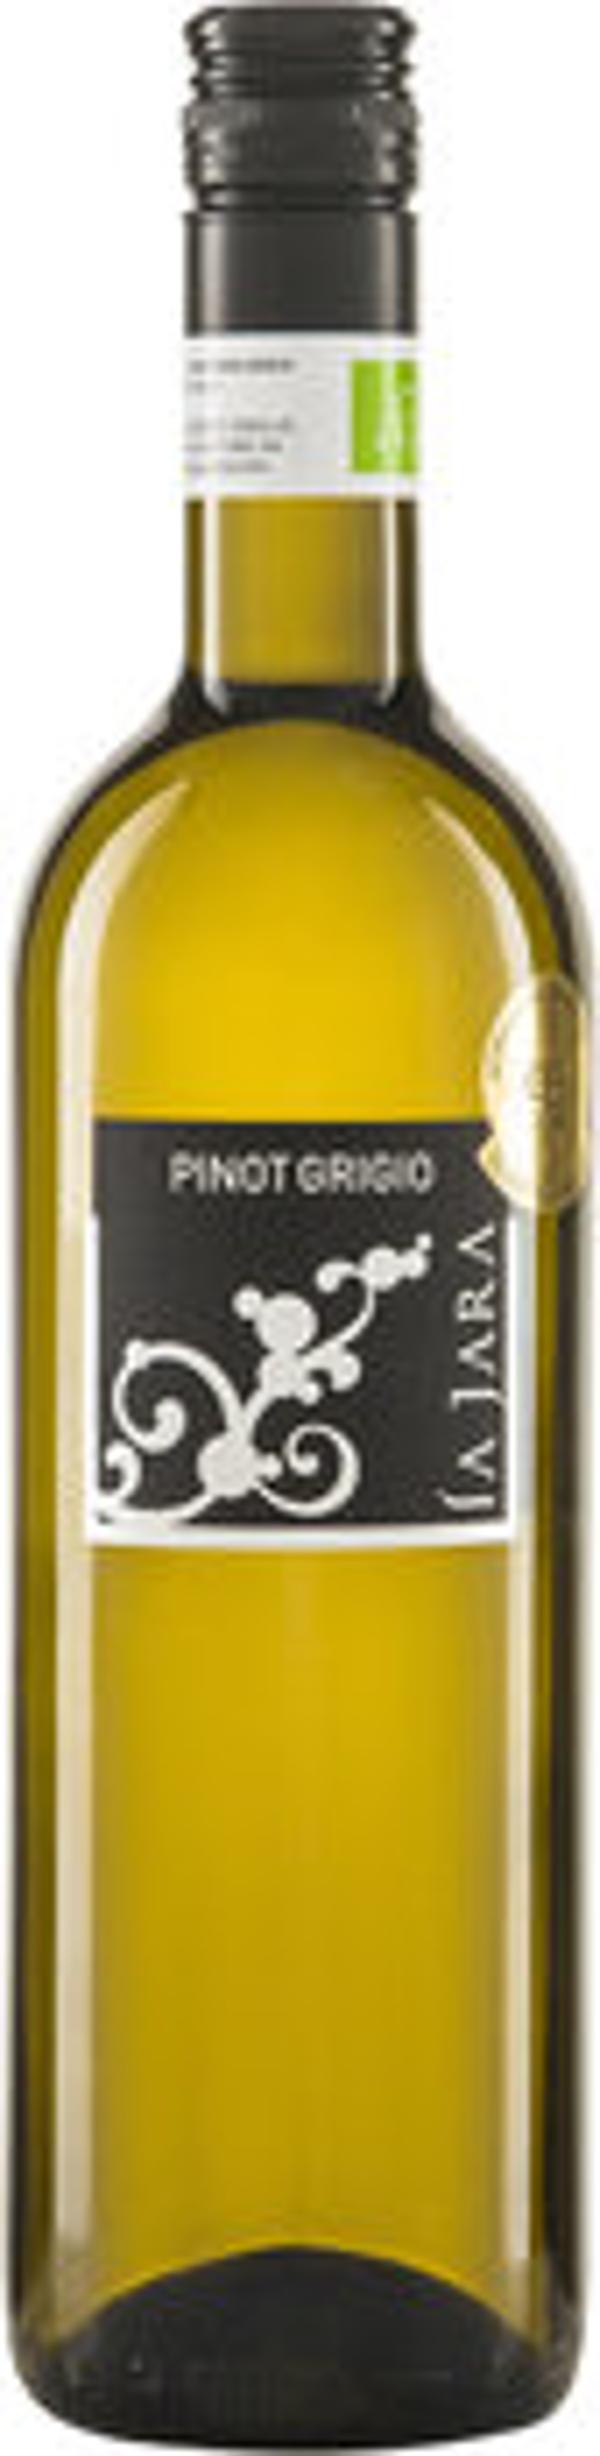 Produktfoto zu Pinot Grigio Bianco delle Vene